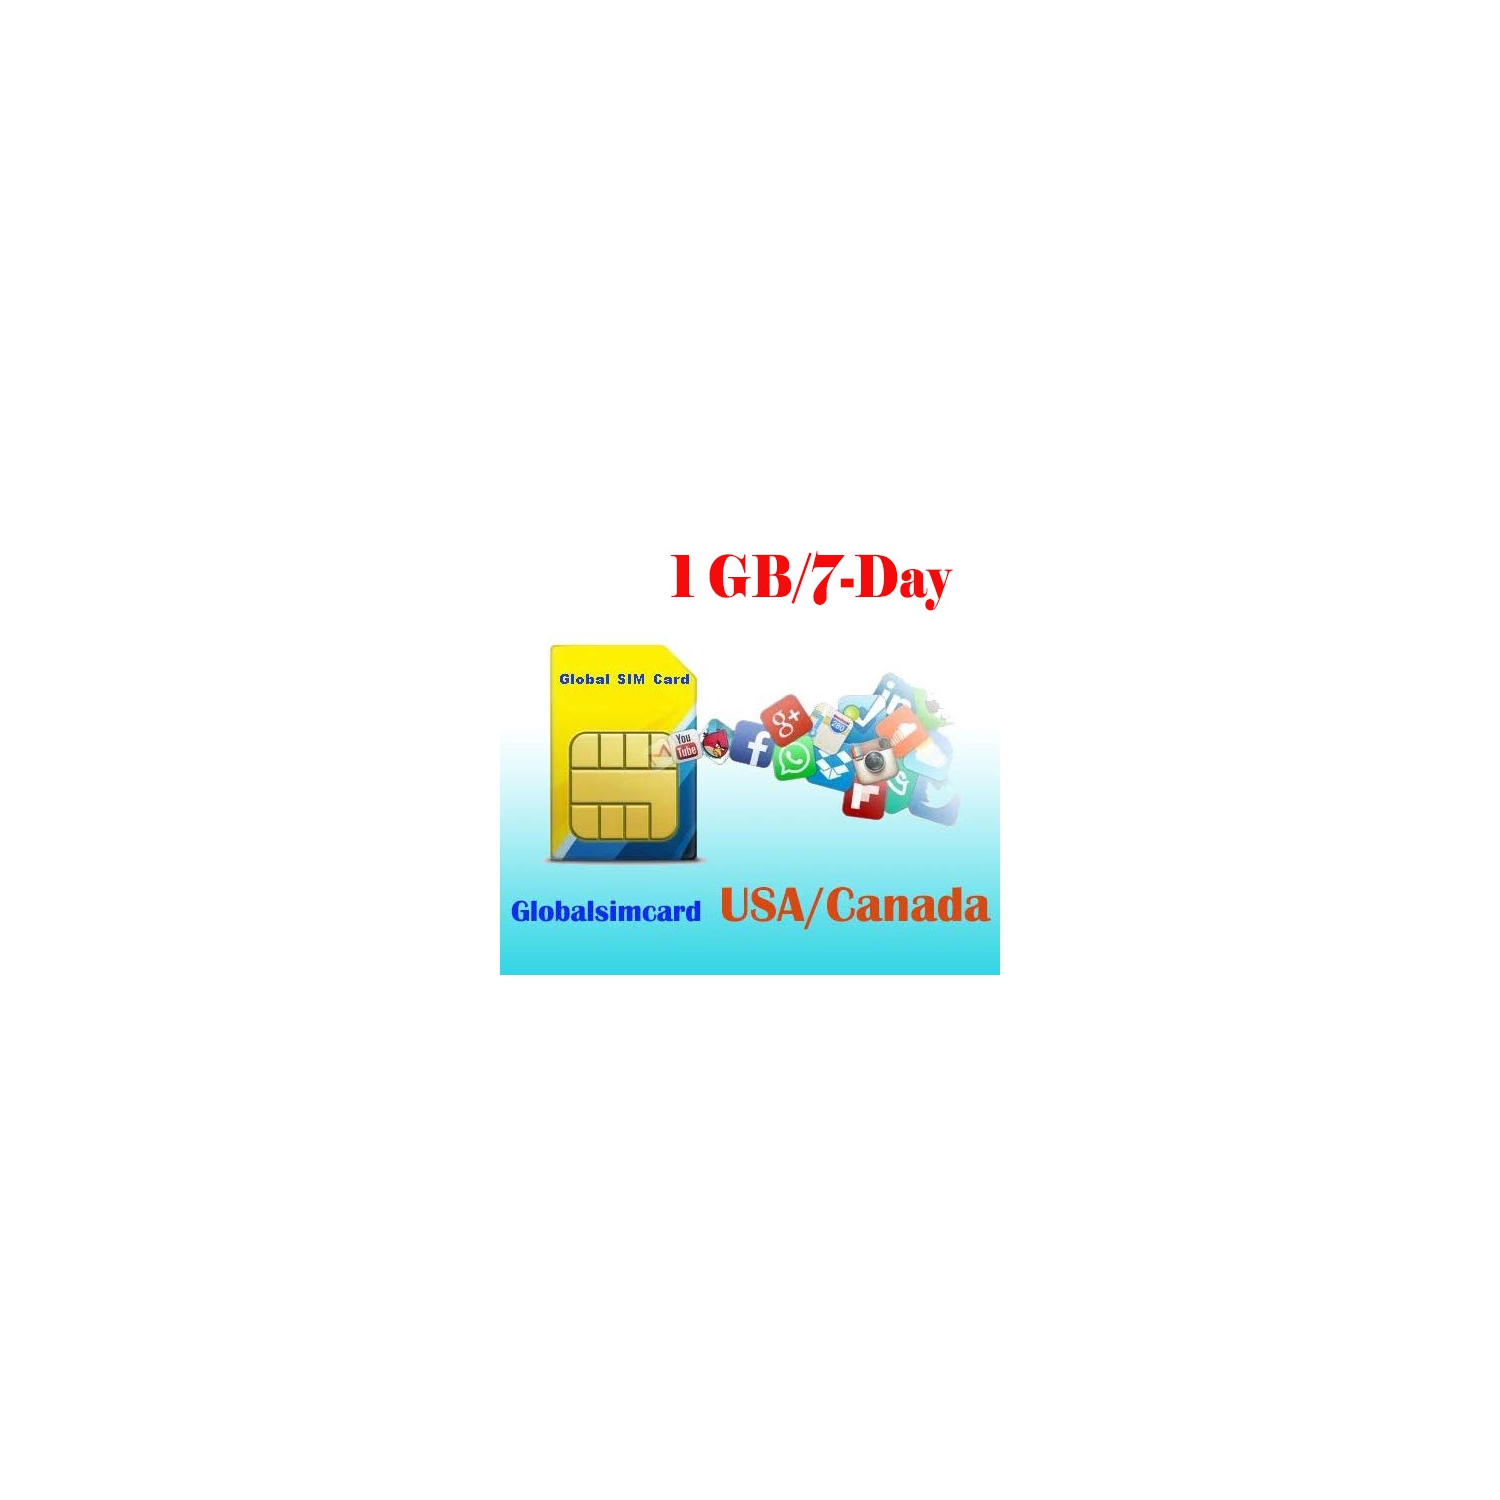 USA/Canada Prepaid DATA Roaming SIM Card 7 Days Unlimited Data (1GB at 4G LTE high Speed, Unlimited 128kbps afterward)